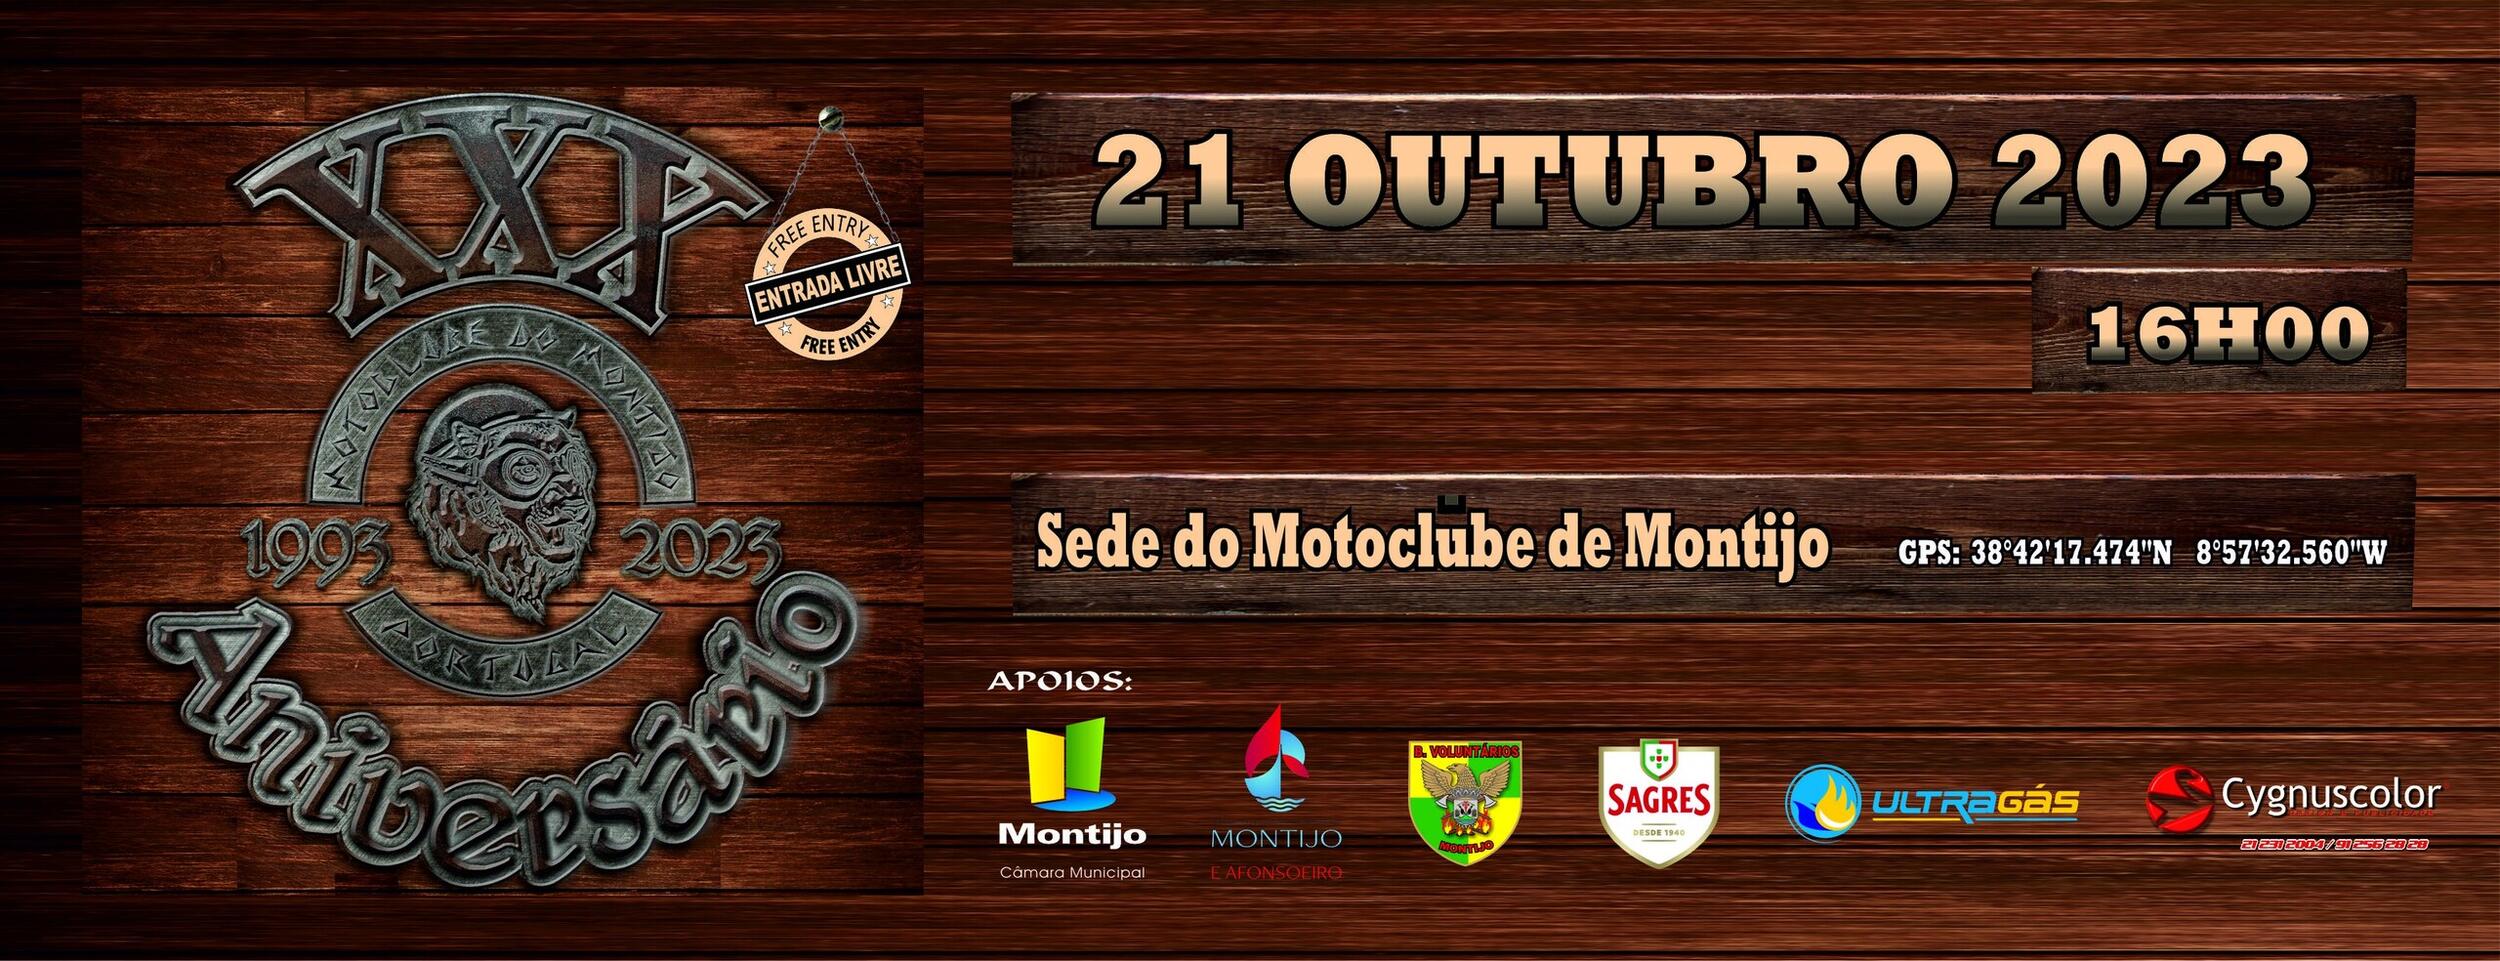 Motoclube do Montijo comemora 30.º aniversário no sábado